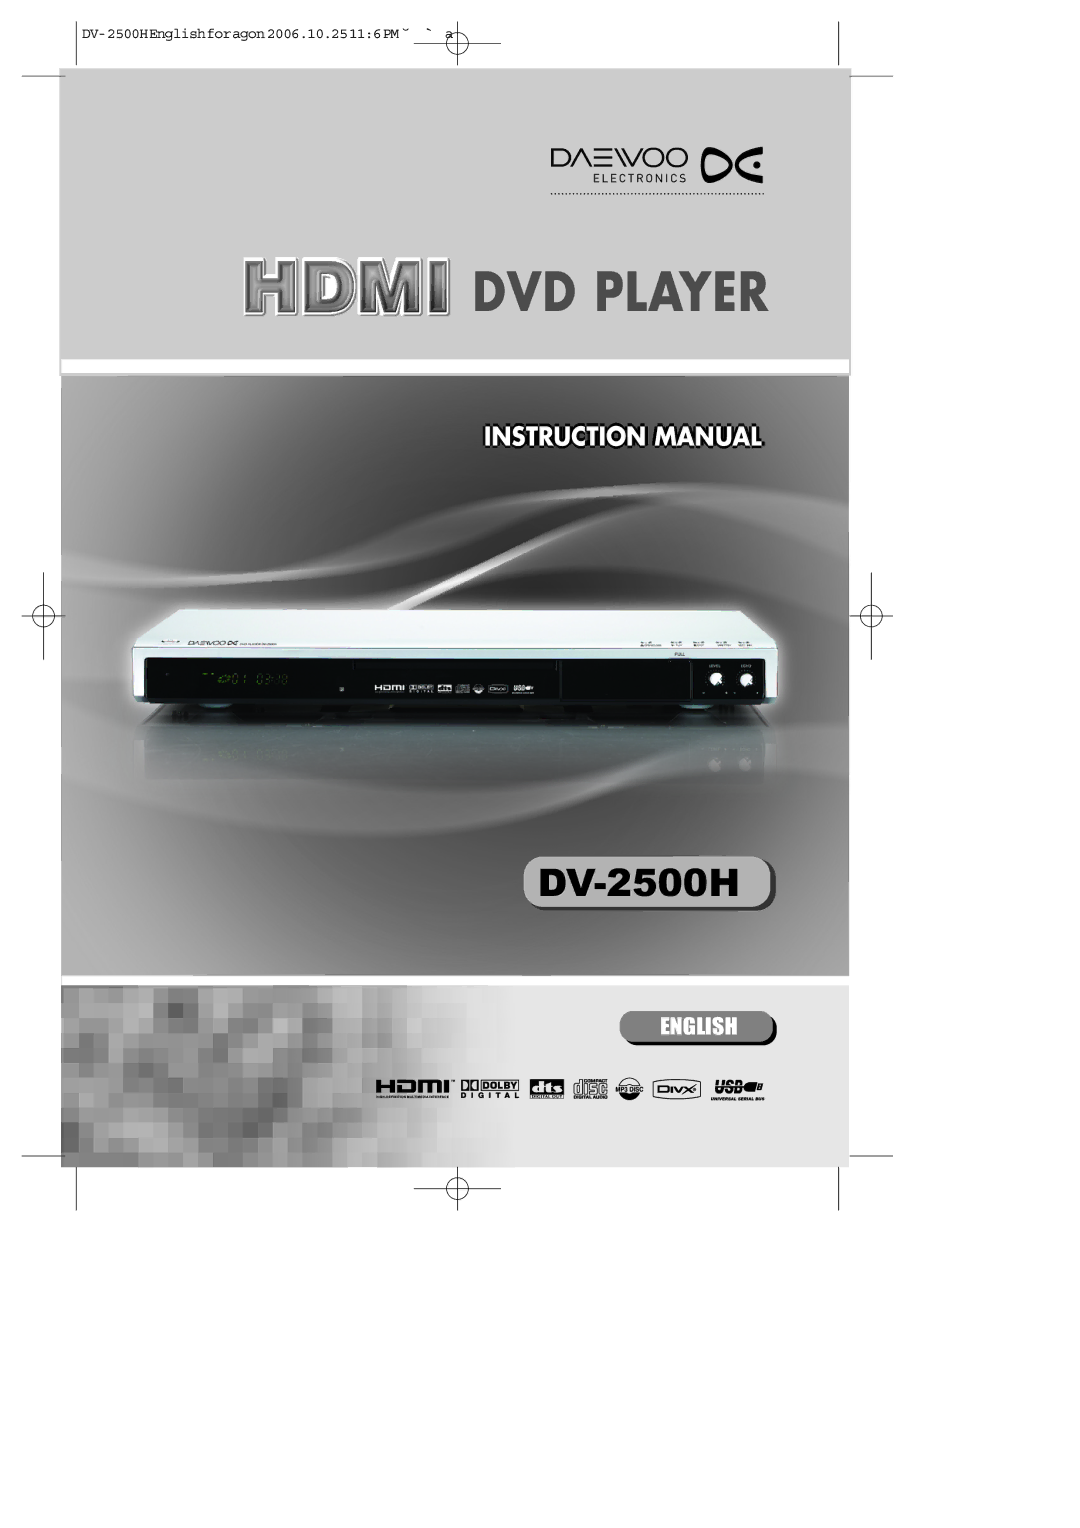 Kodak DV-2500H instruction manual DVD Player 